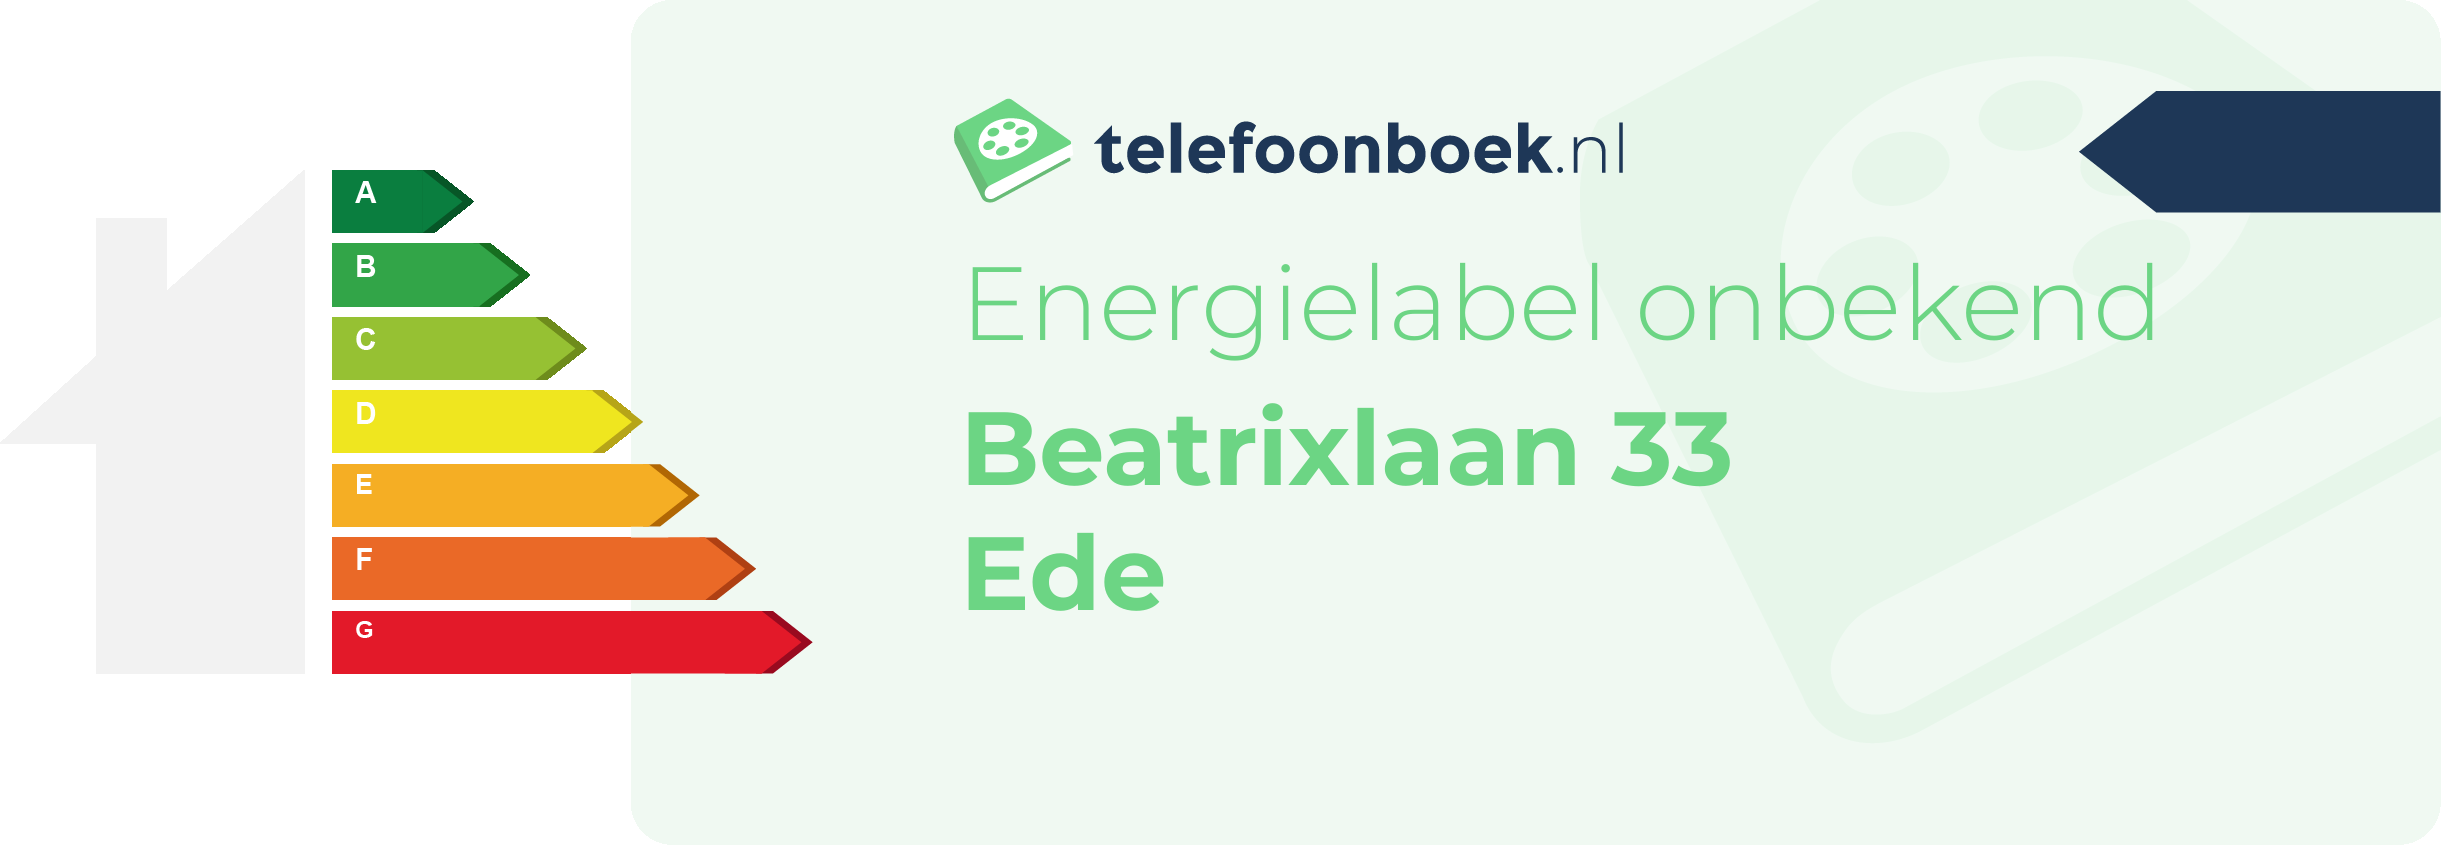 Energielabel Beatrixlaan 33 Ede